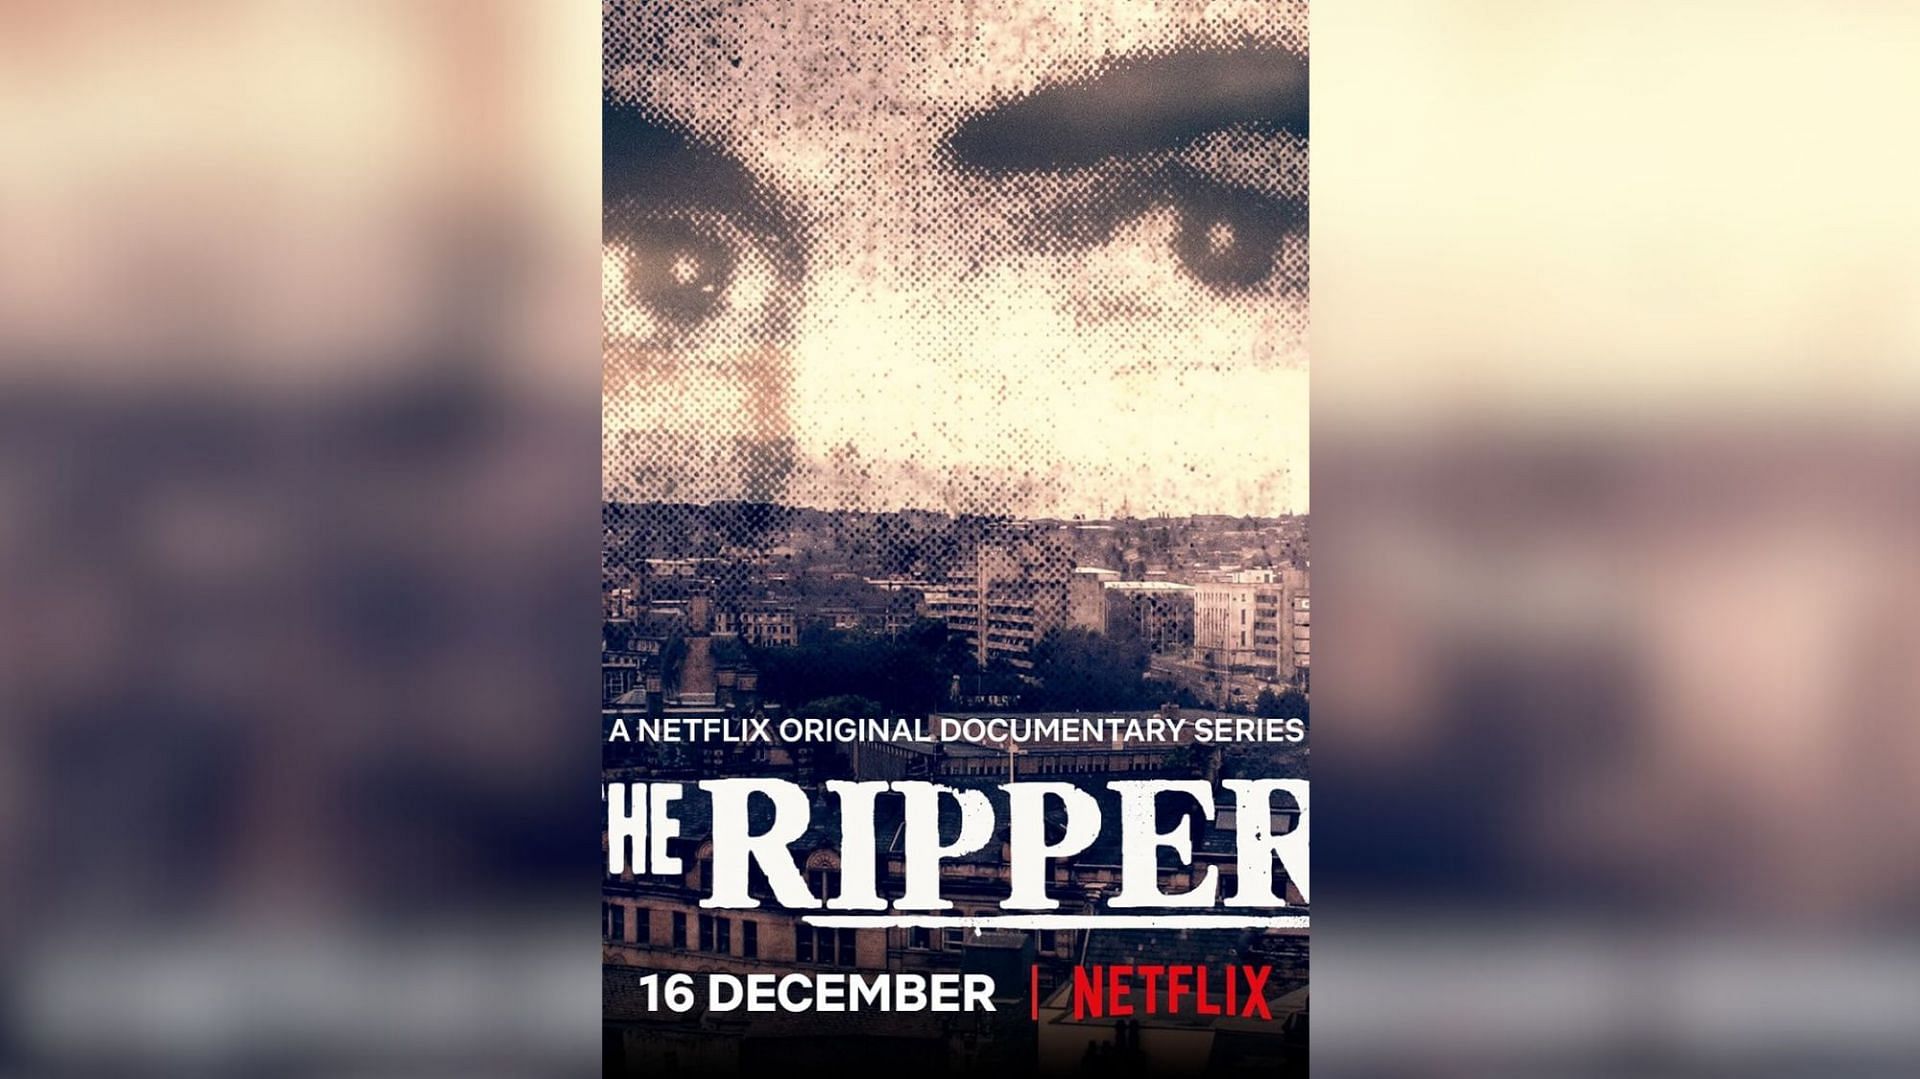 The Ripper (Image via Netflix)